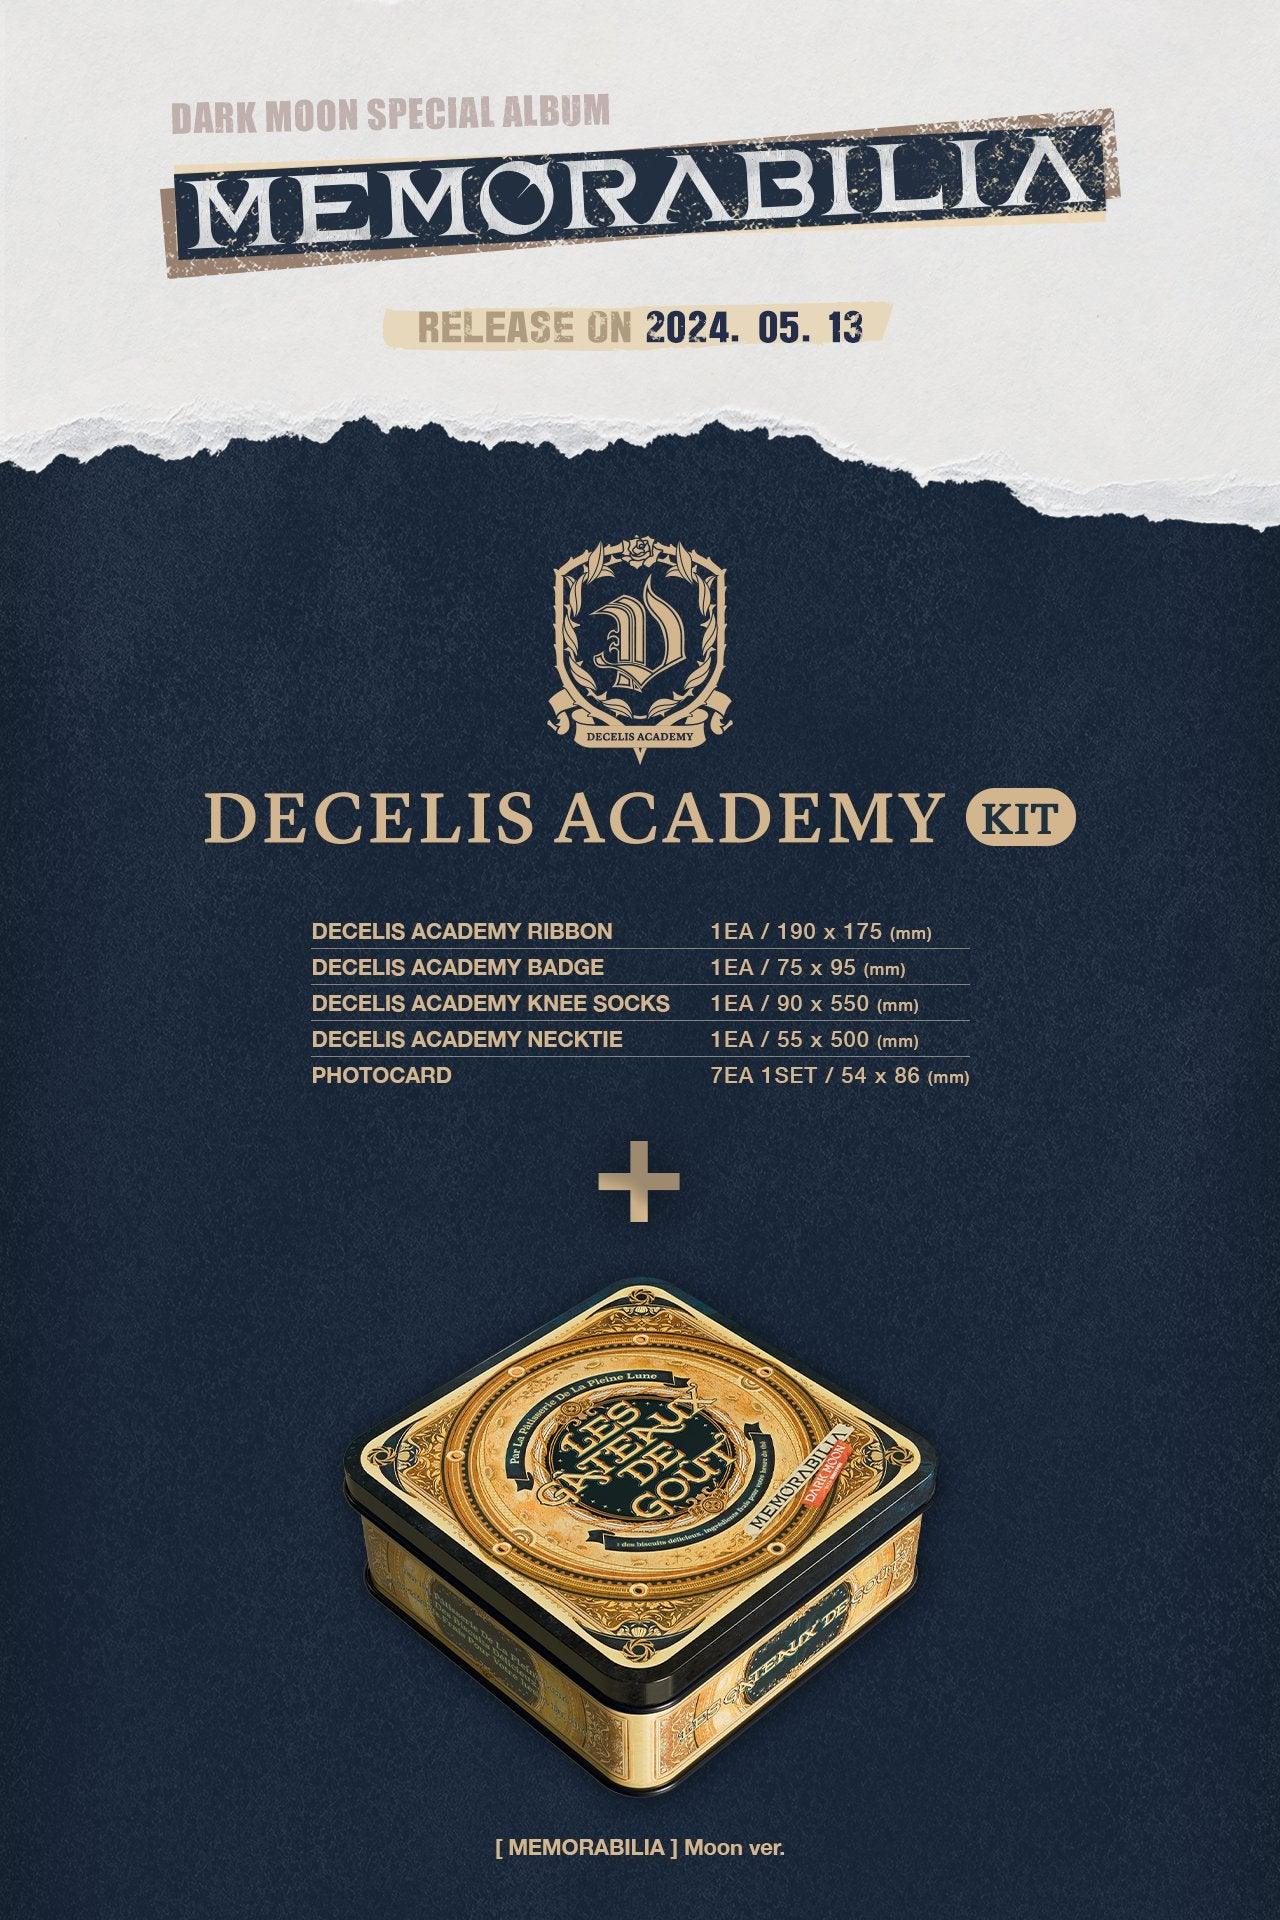 [PRE ORDER] ENHYPEN - [MEMORABILIA] (DARK MOON Special Album ) MOON Ver & Decelis Academy KIT(POB Weverse Shop GIFT) - KAEPJJANG SHOP (캡짱 숍)